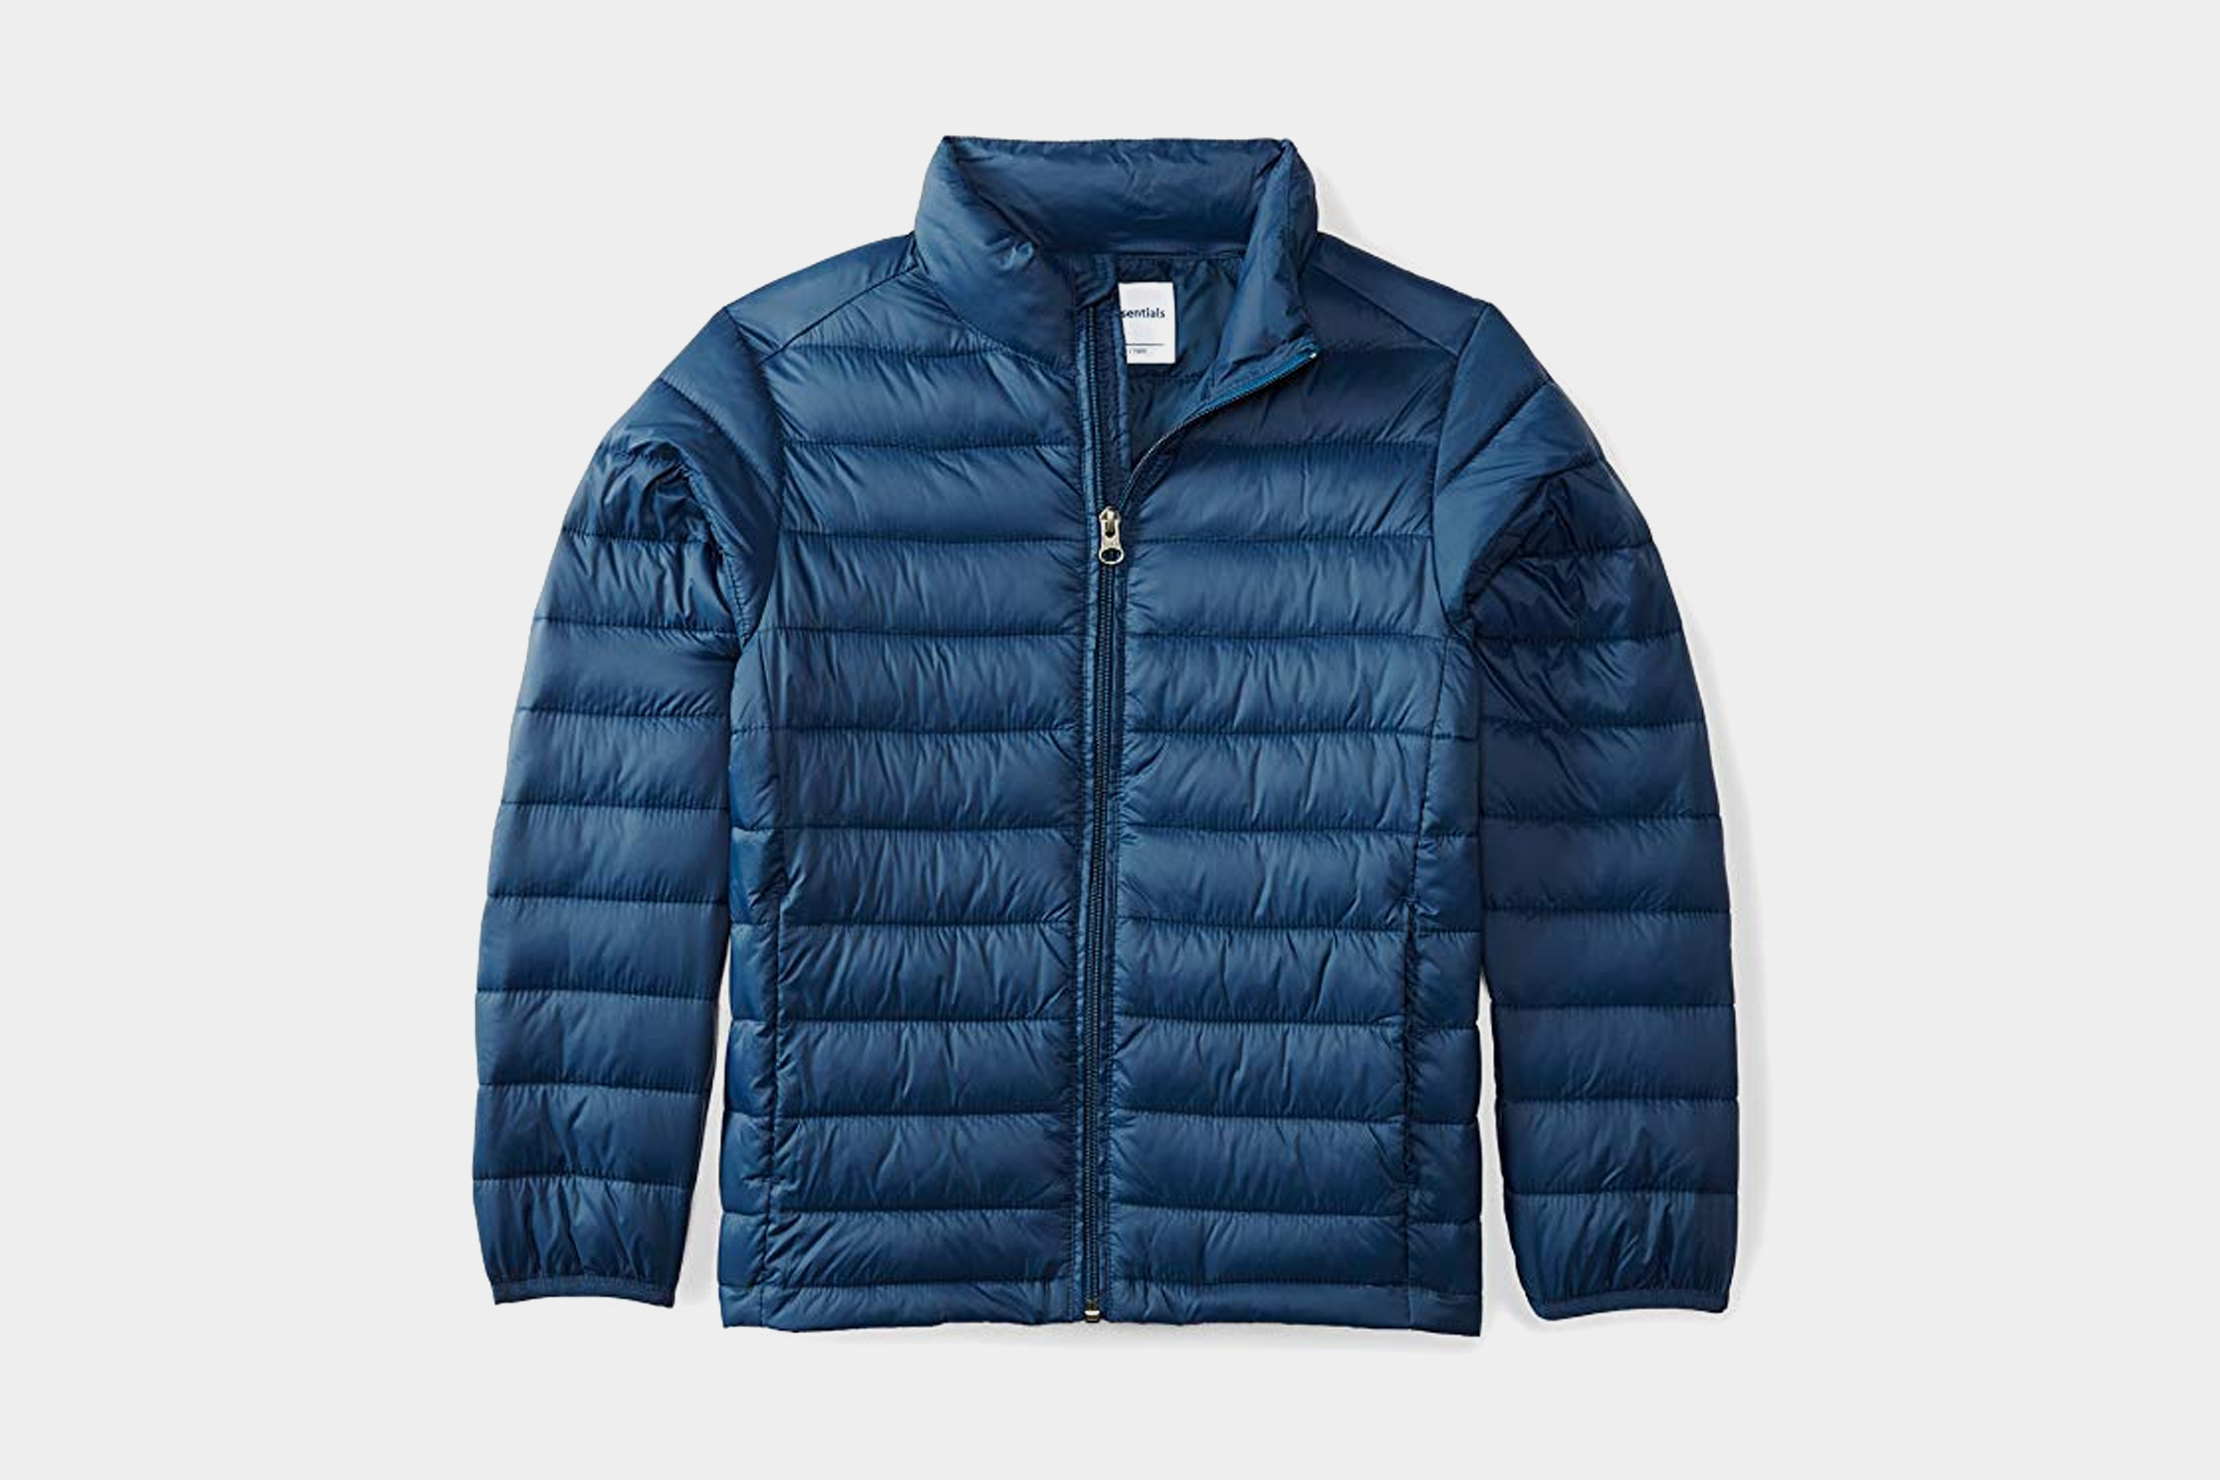 Essentials Big Boys Water-Resistant Packable Hooded Puffer Jacket Outerwear Navy Medium